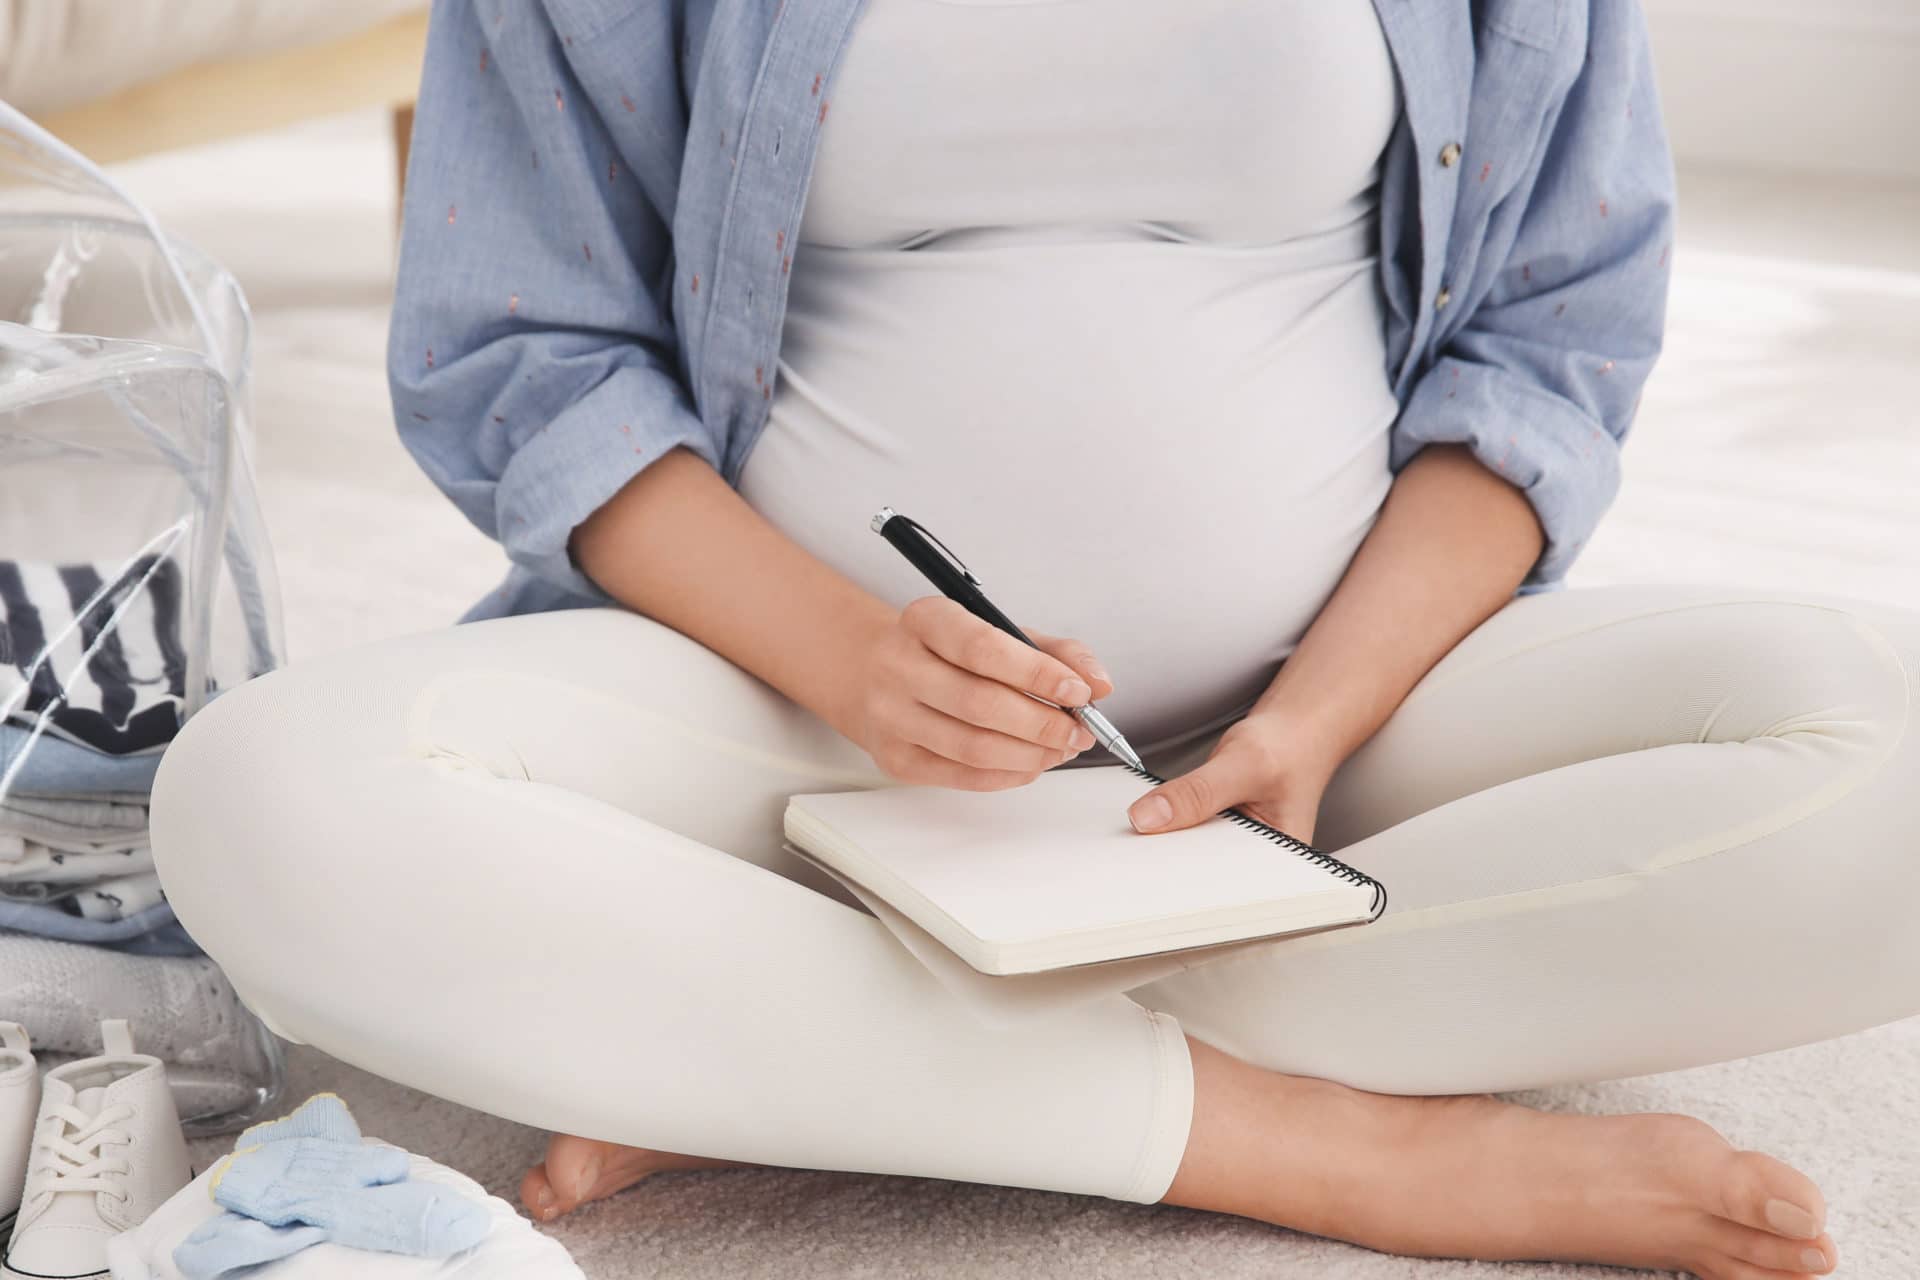 Pregnant lady journaling, logging